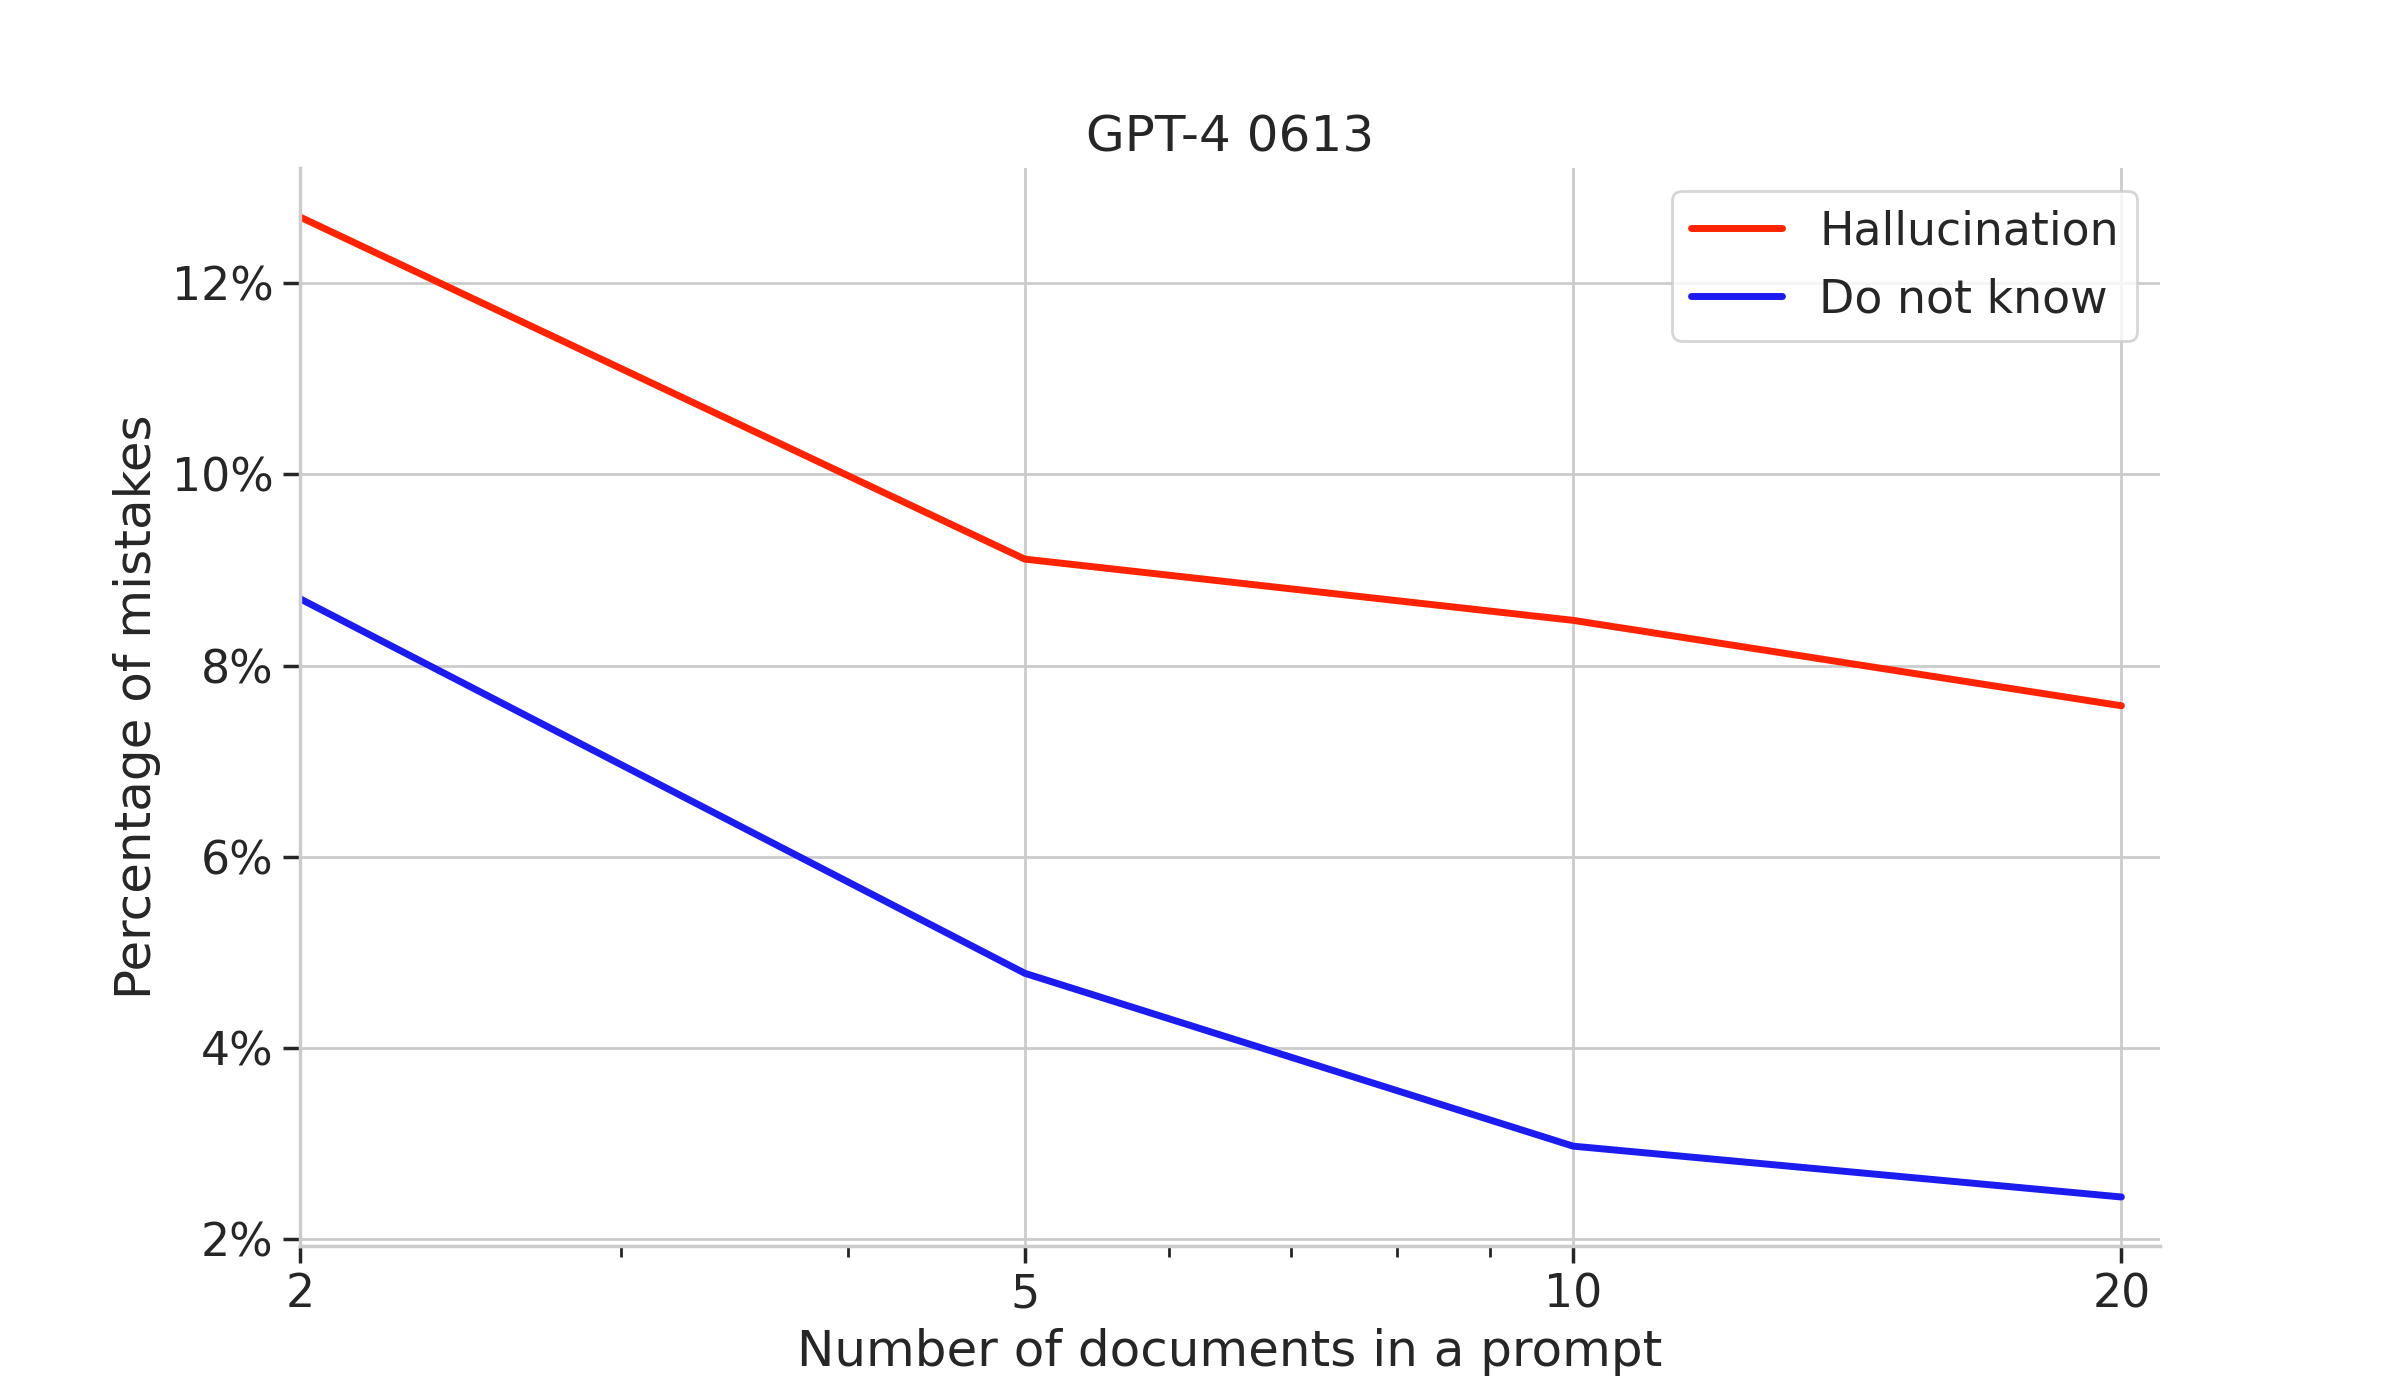 Mistake analysis of GPT 4 0613